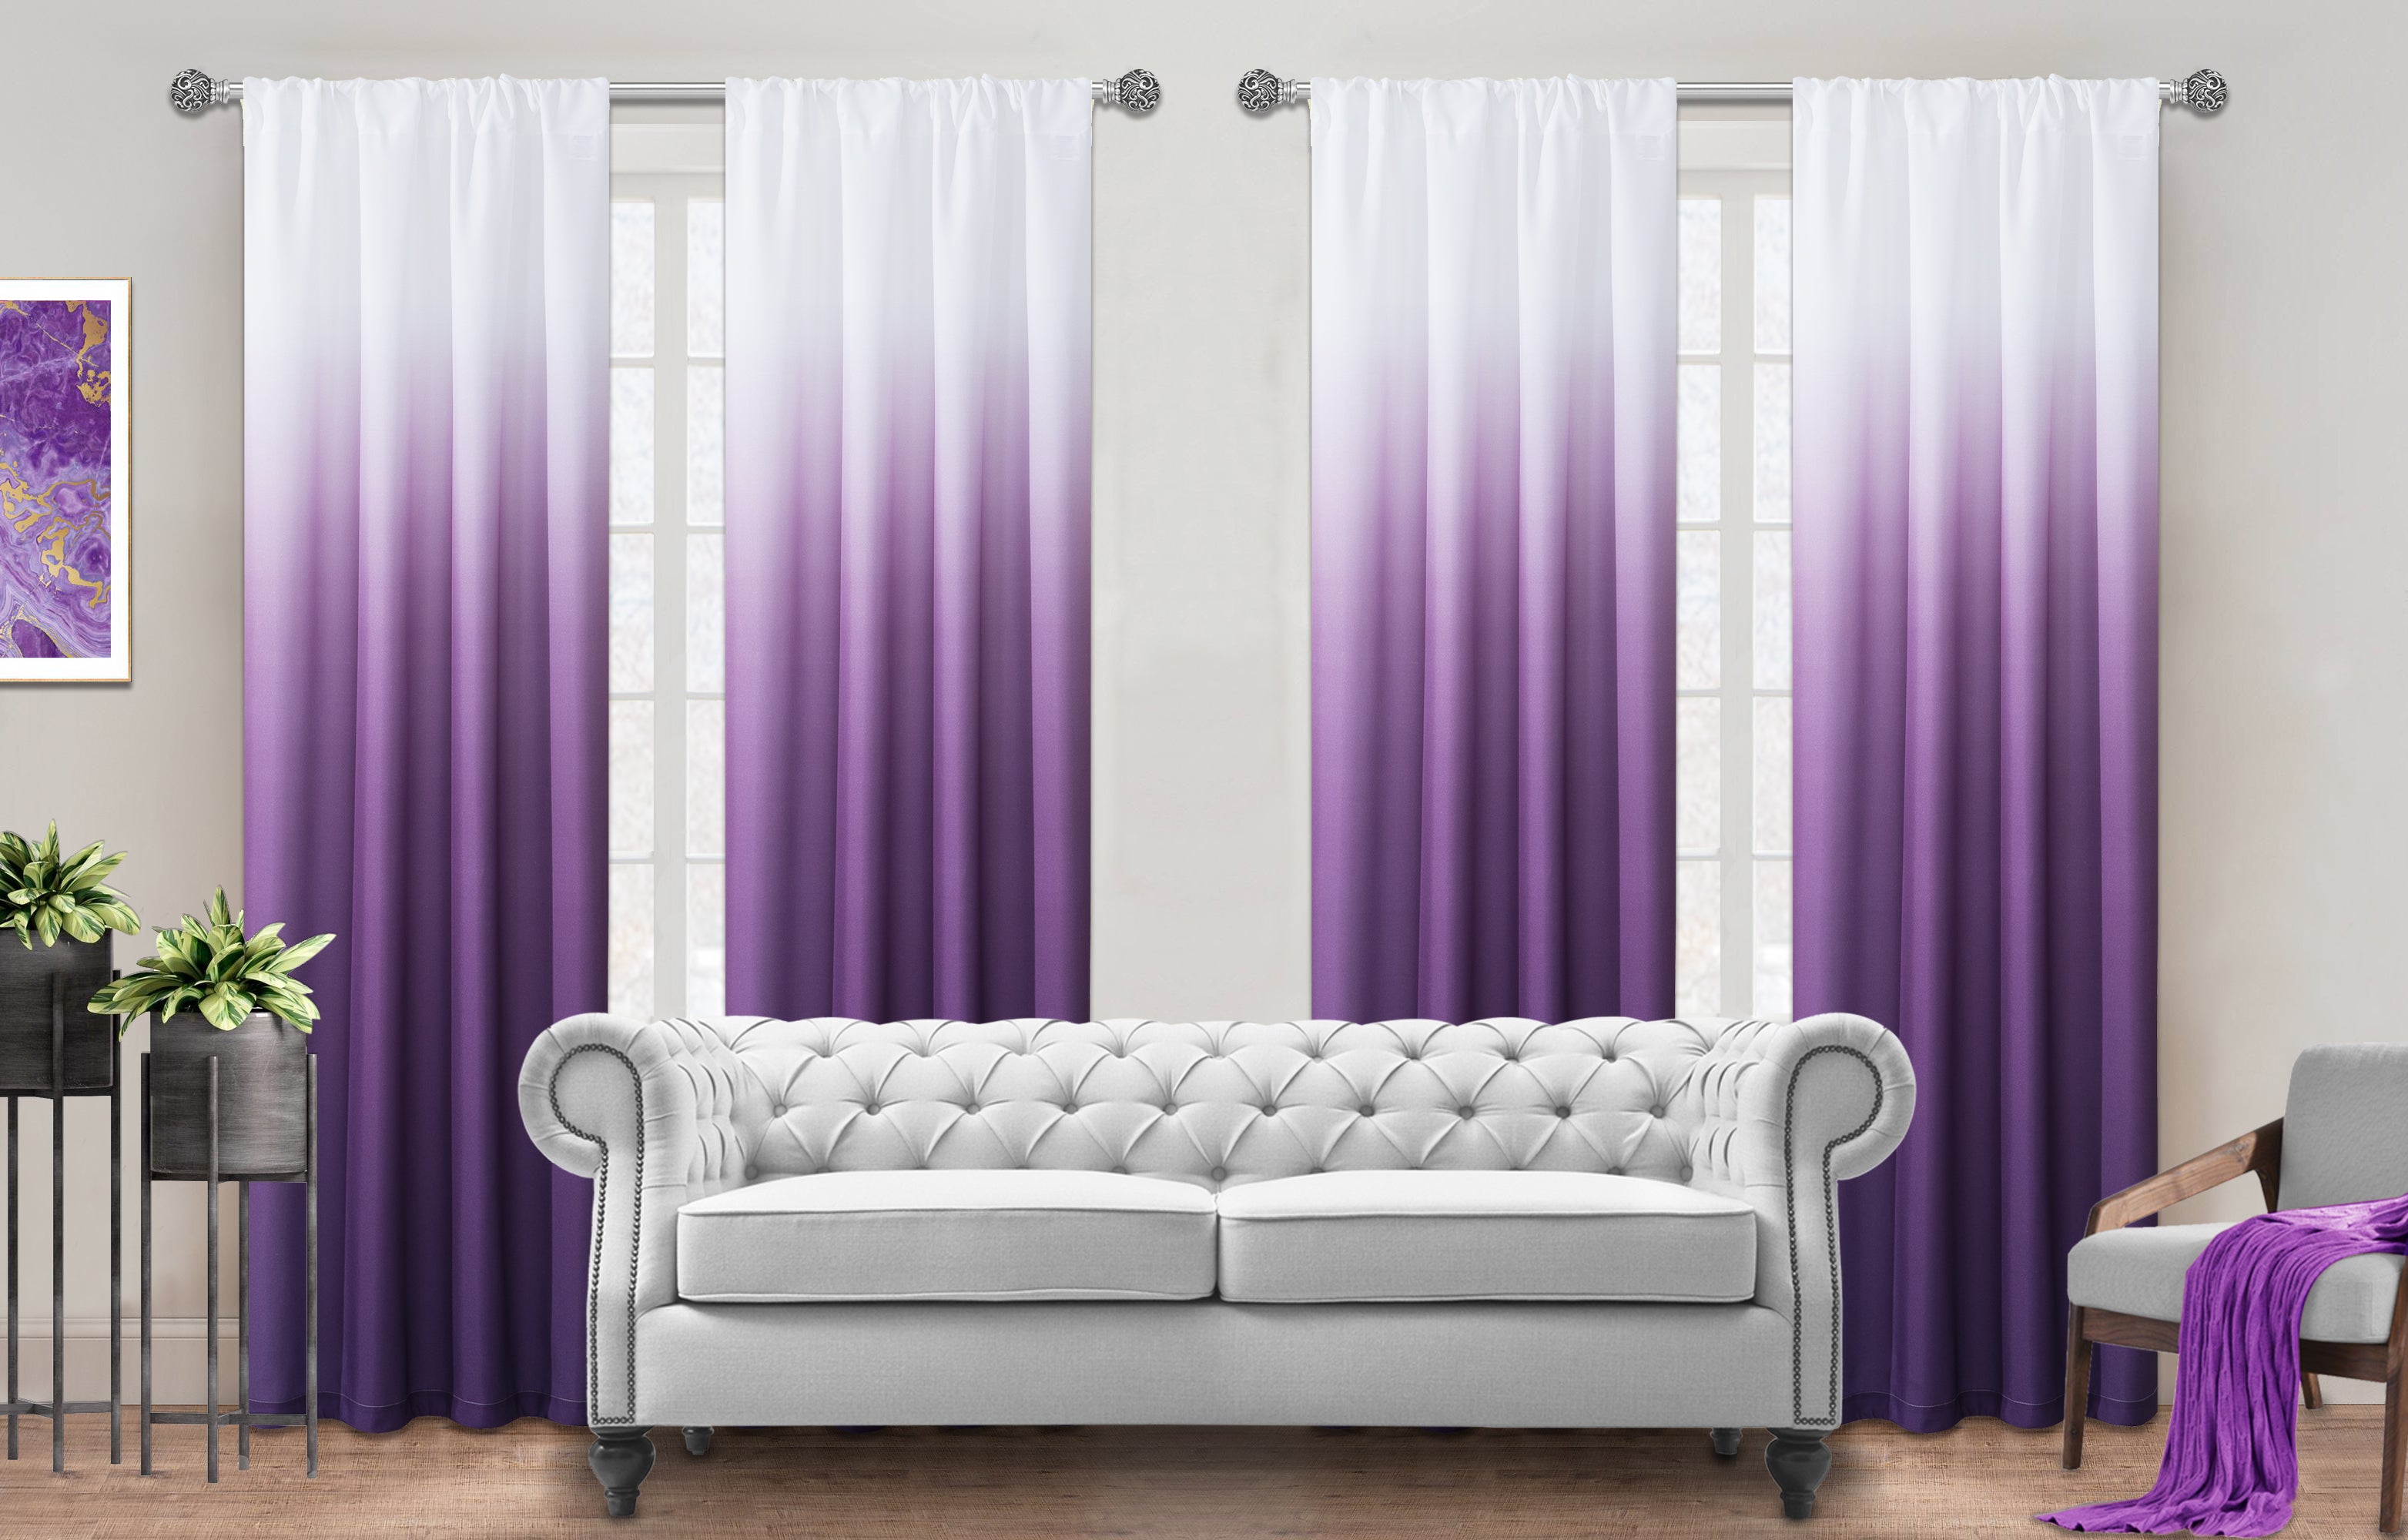 Dainty Home Shades Gradient Ombre Design Heavy Room Darkening Rod Pocket Set Of 4 Window Panels